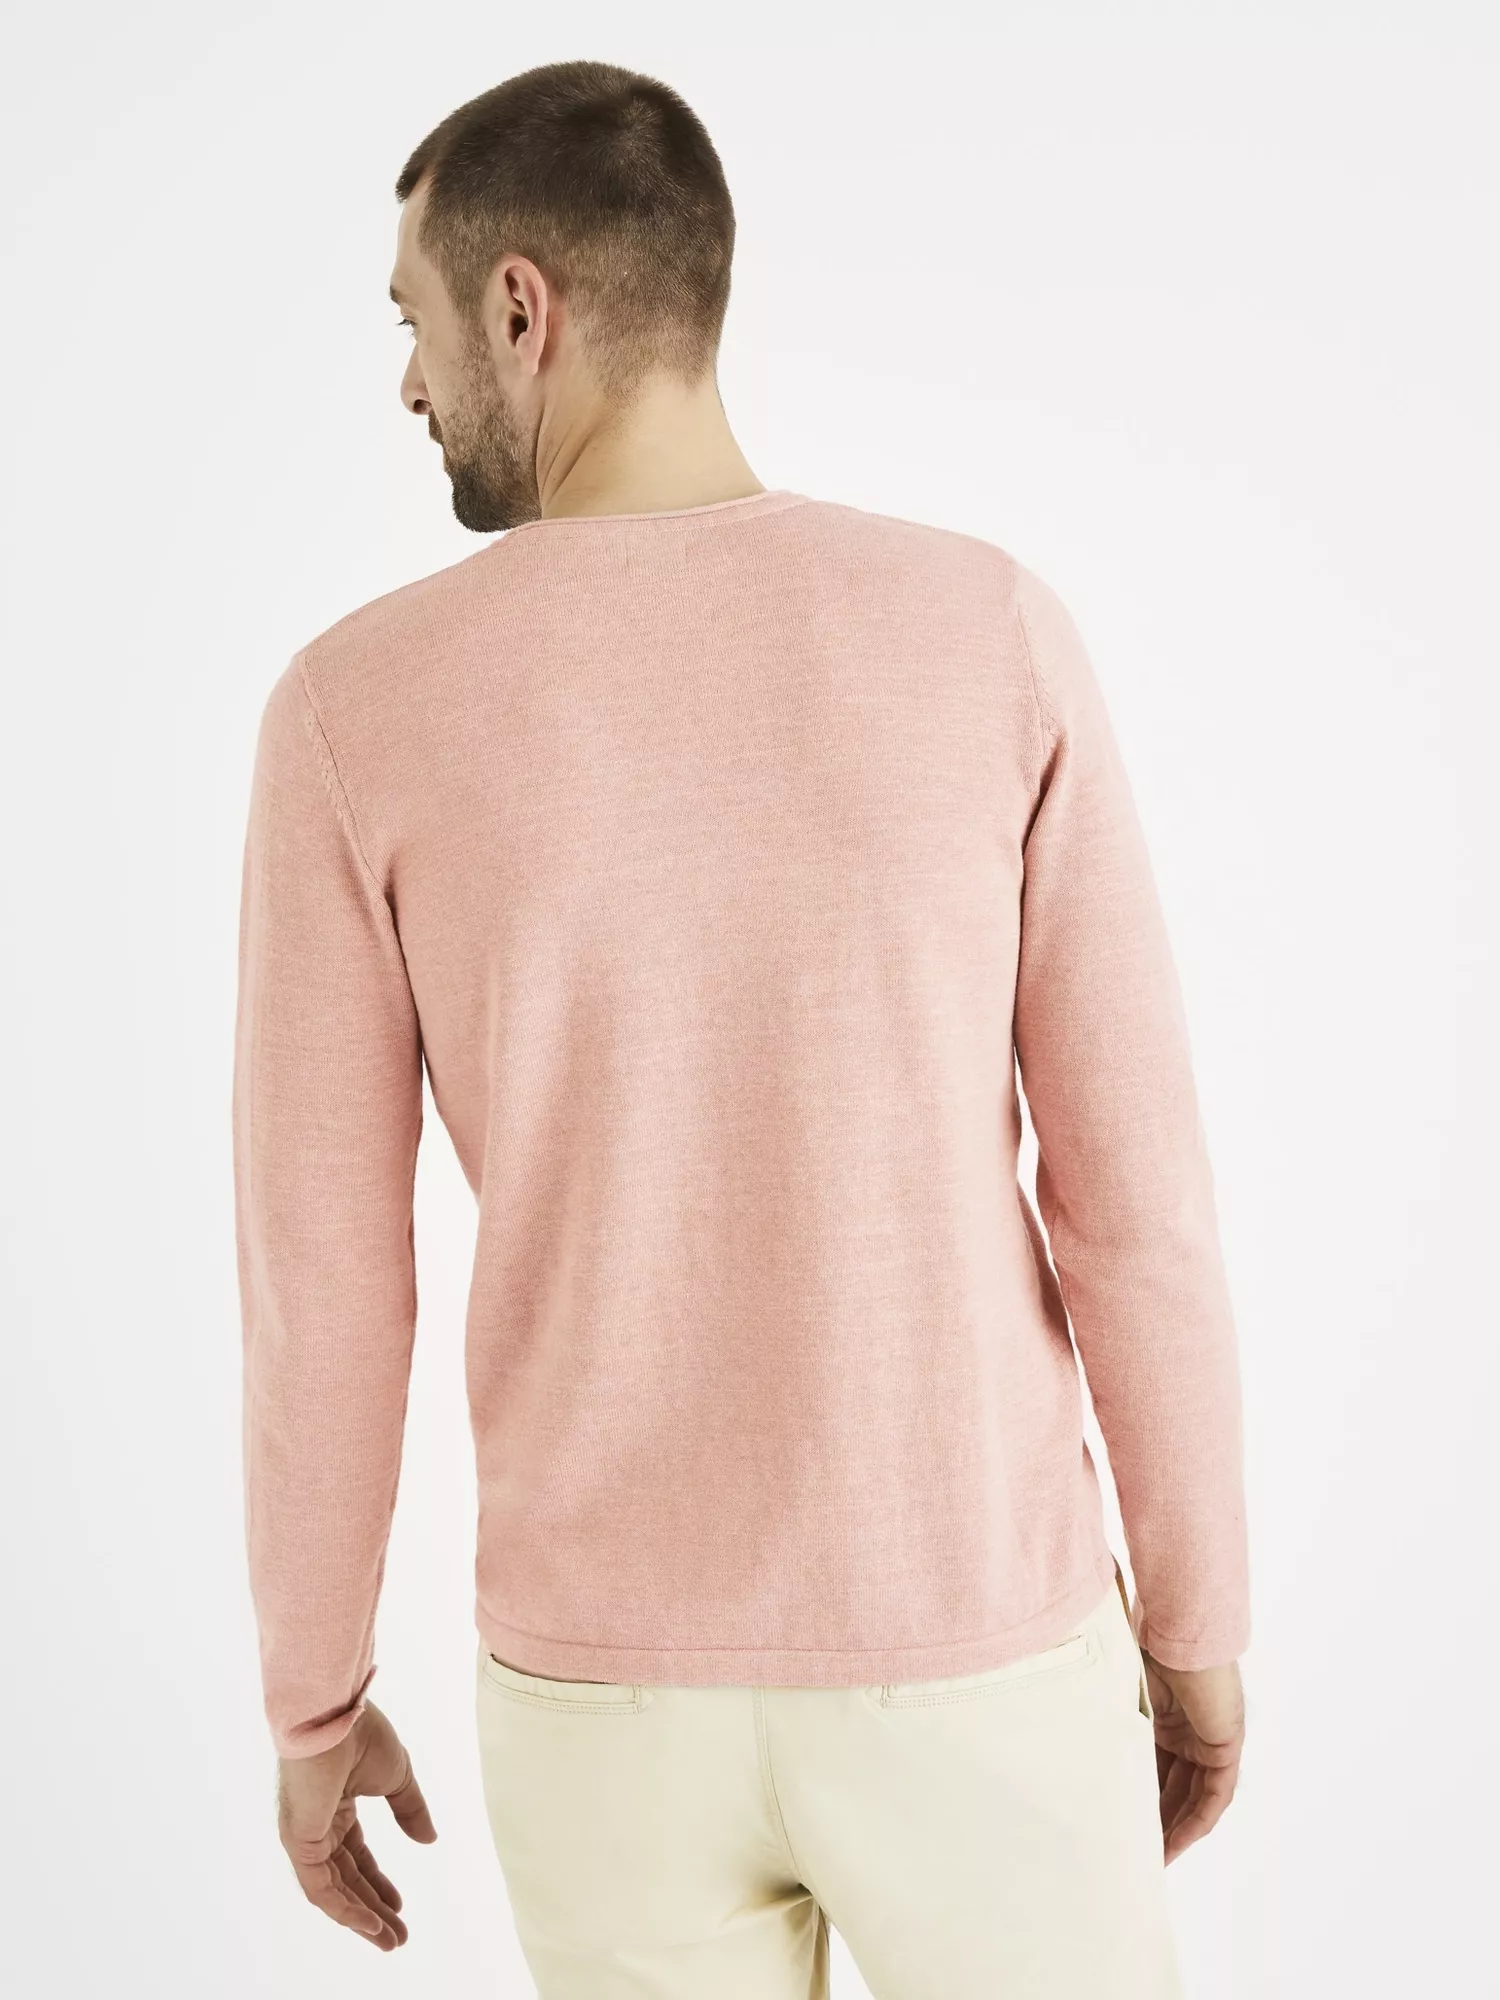 Bavlněný svetr Tegenial s melírem (3)